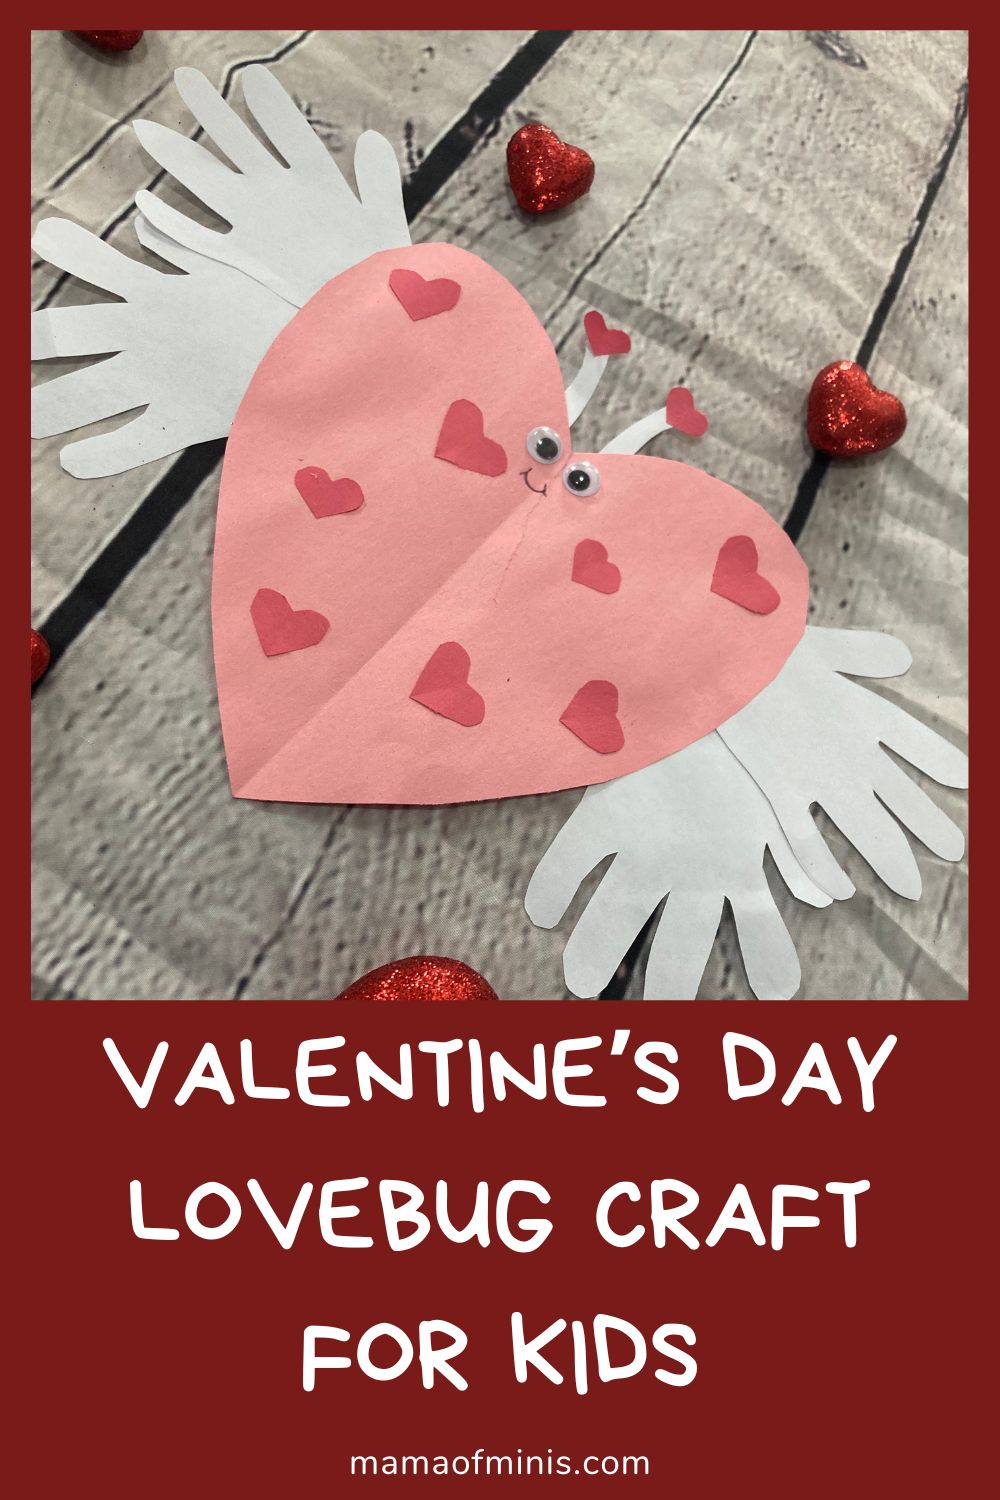 Valentine's Day Lovebug Craft for Kids